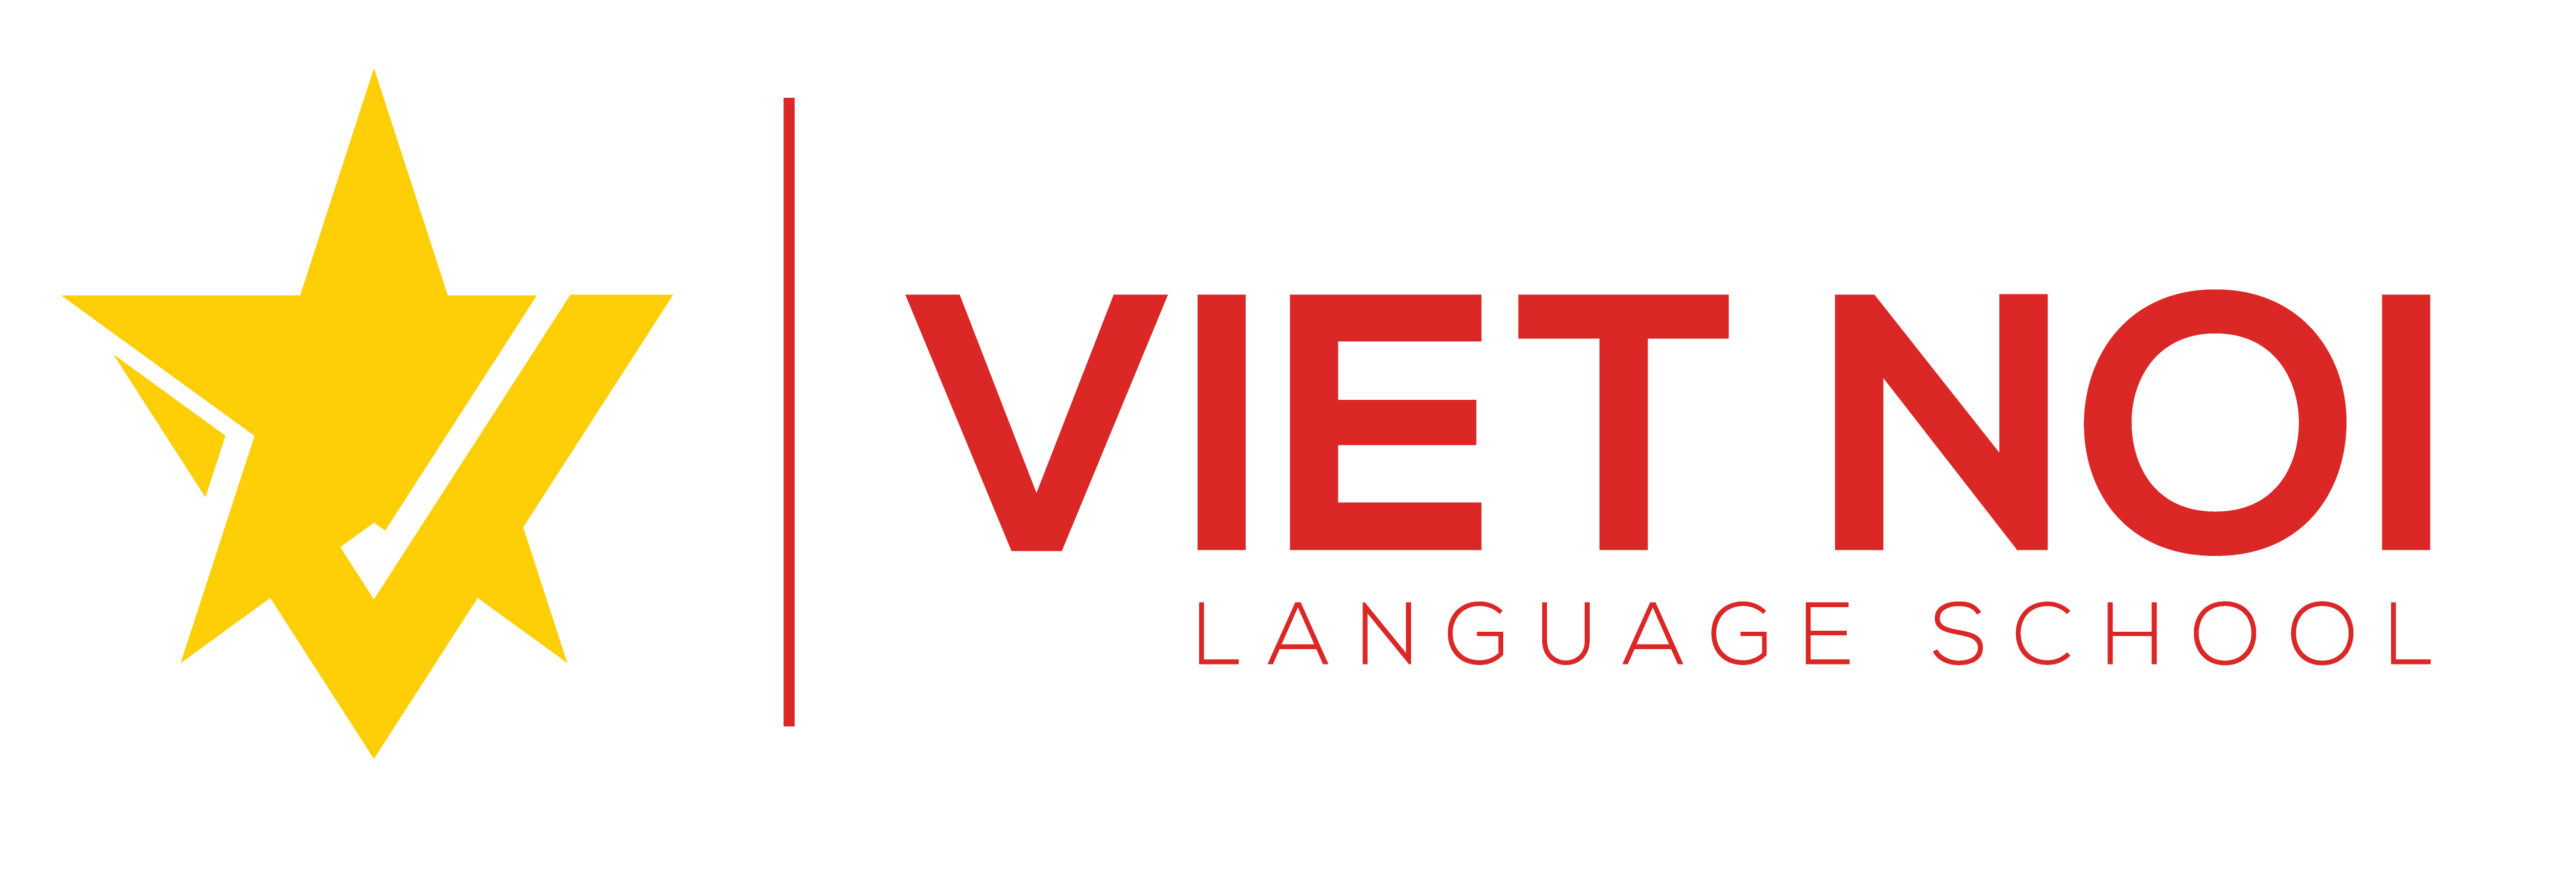 Vietnamese language school